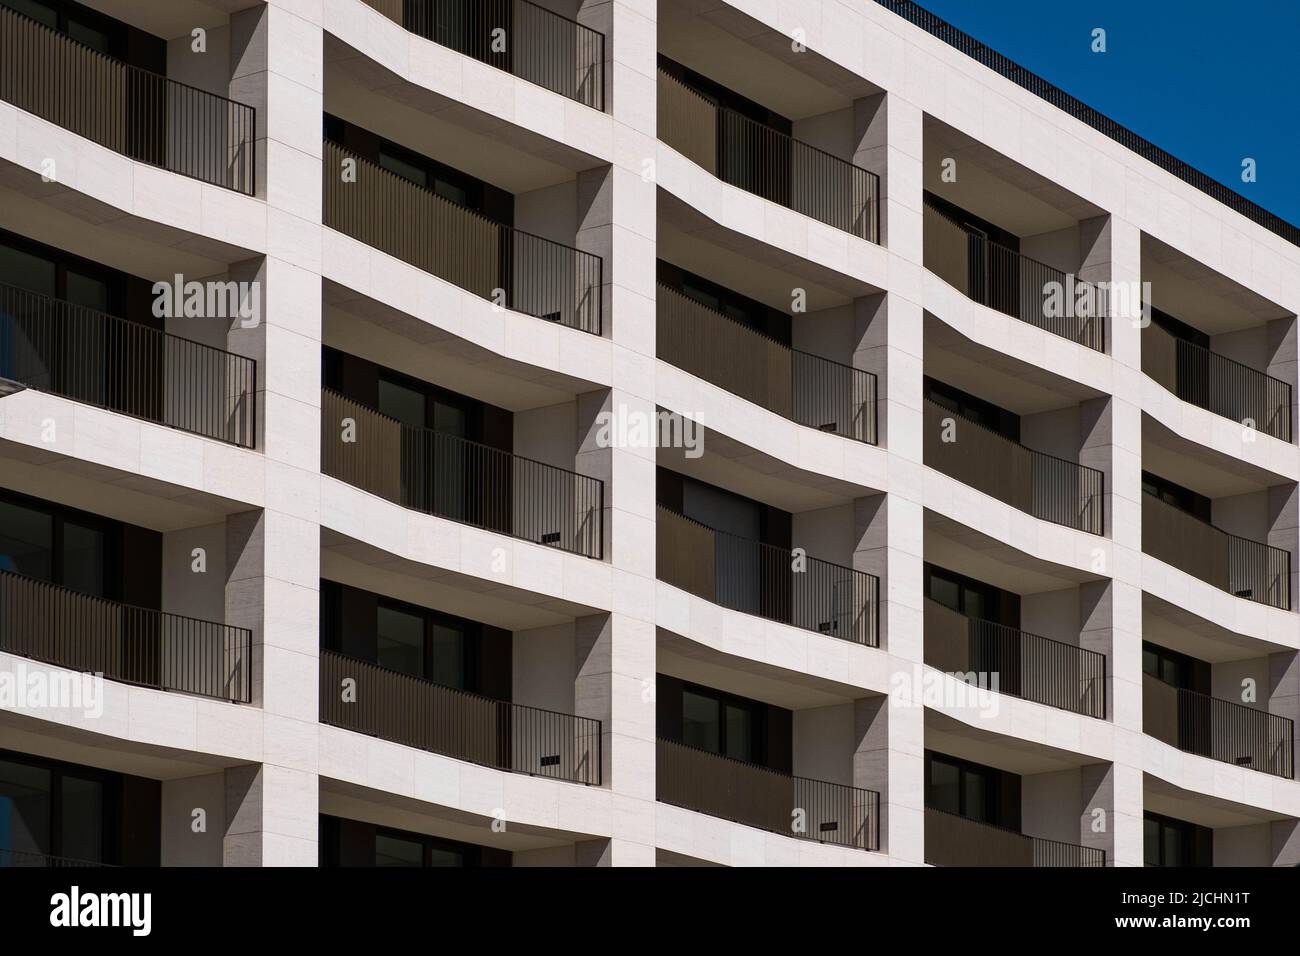 modern residential real estate, apartment building facade Stock Photo